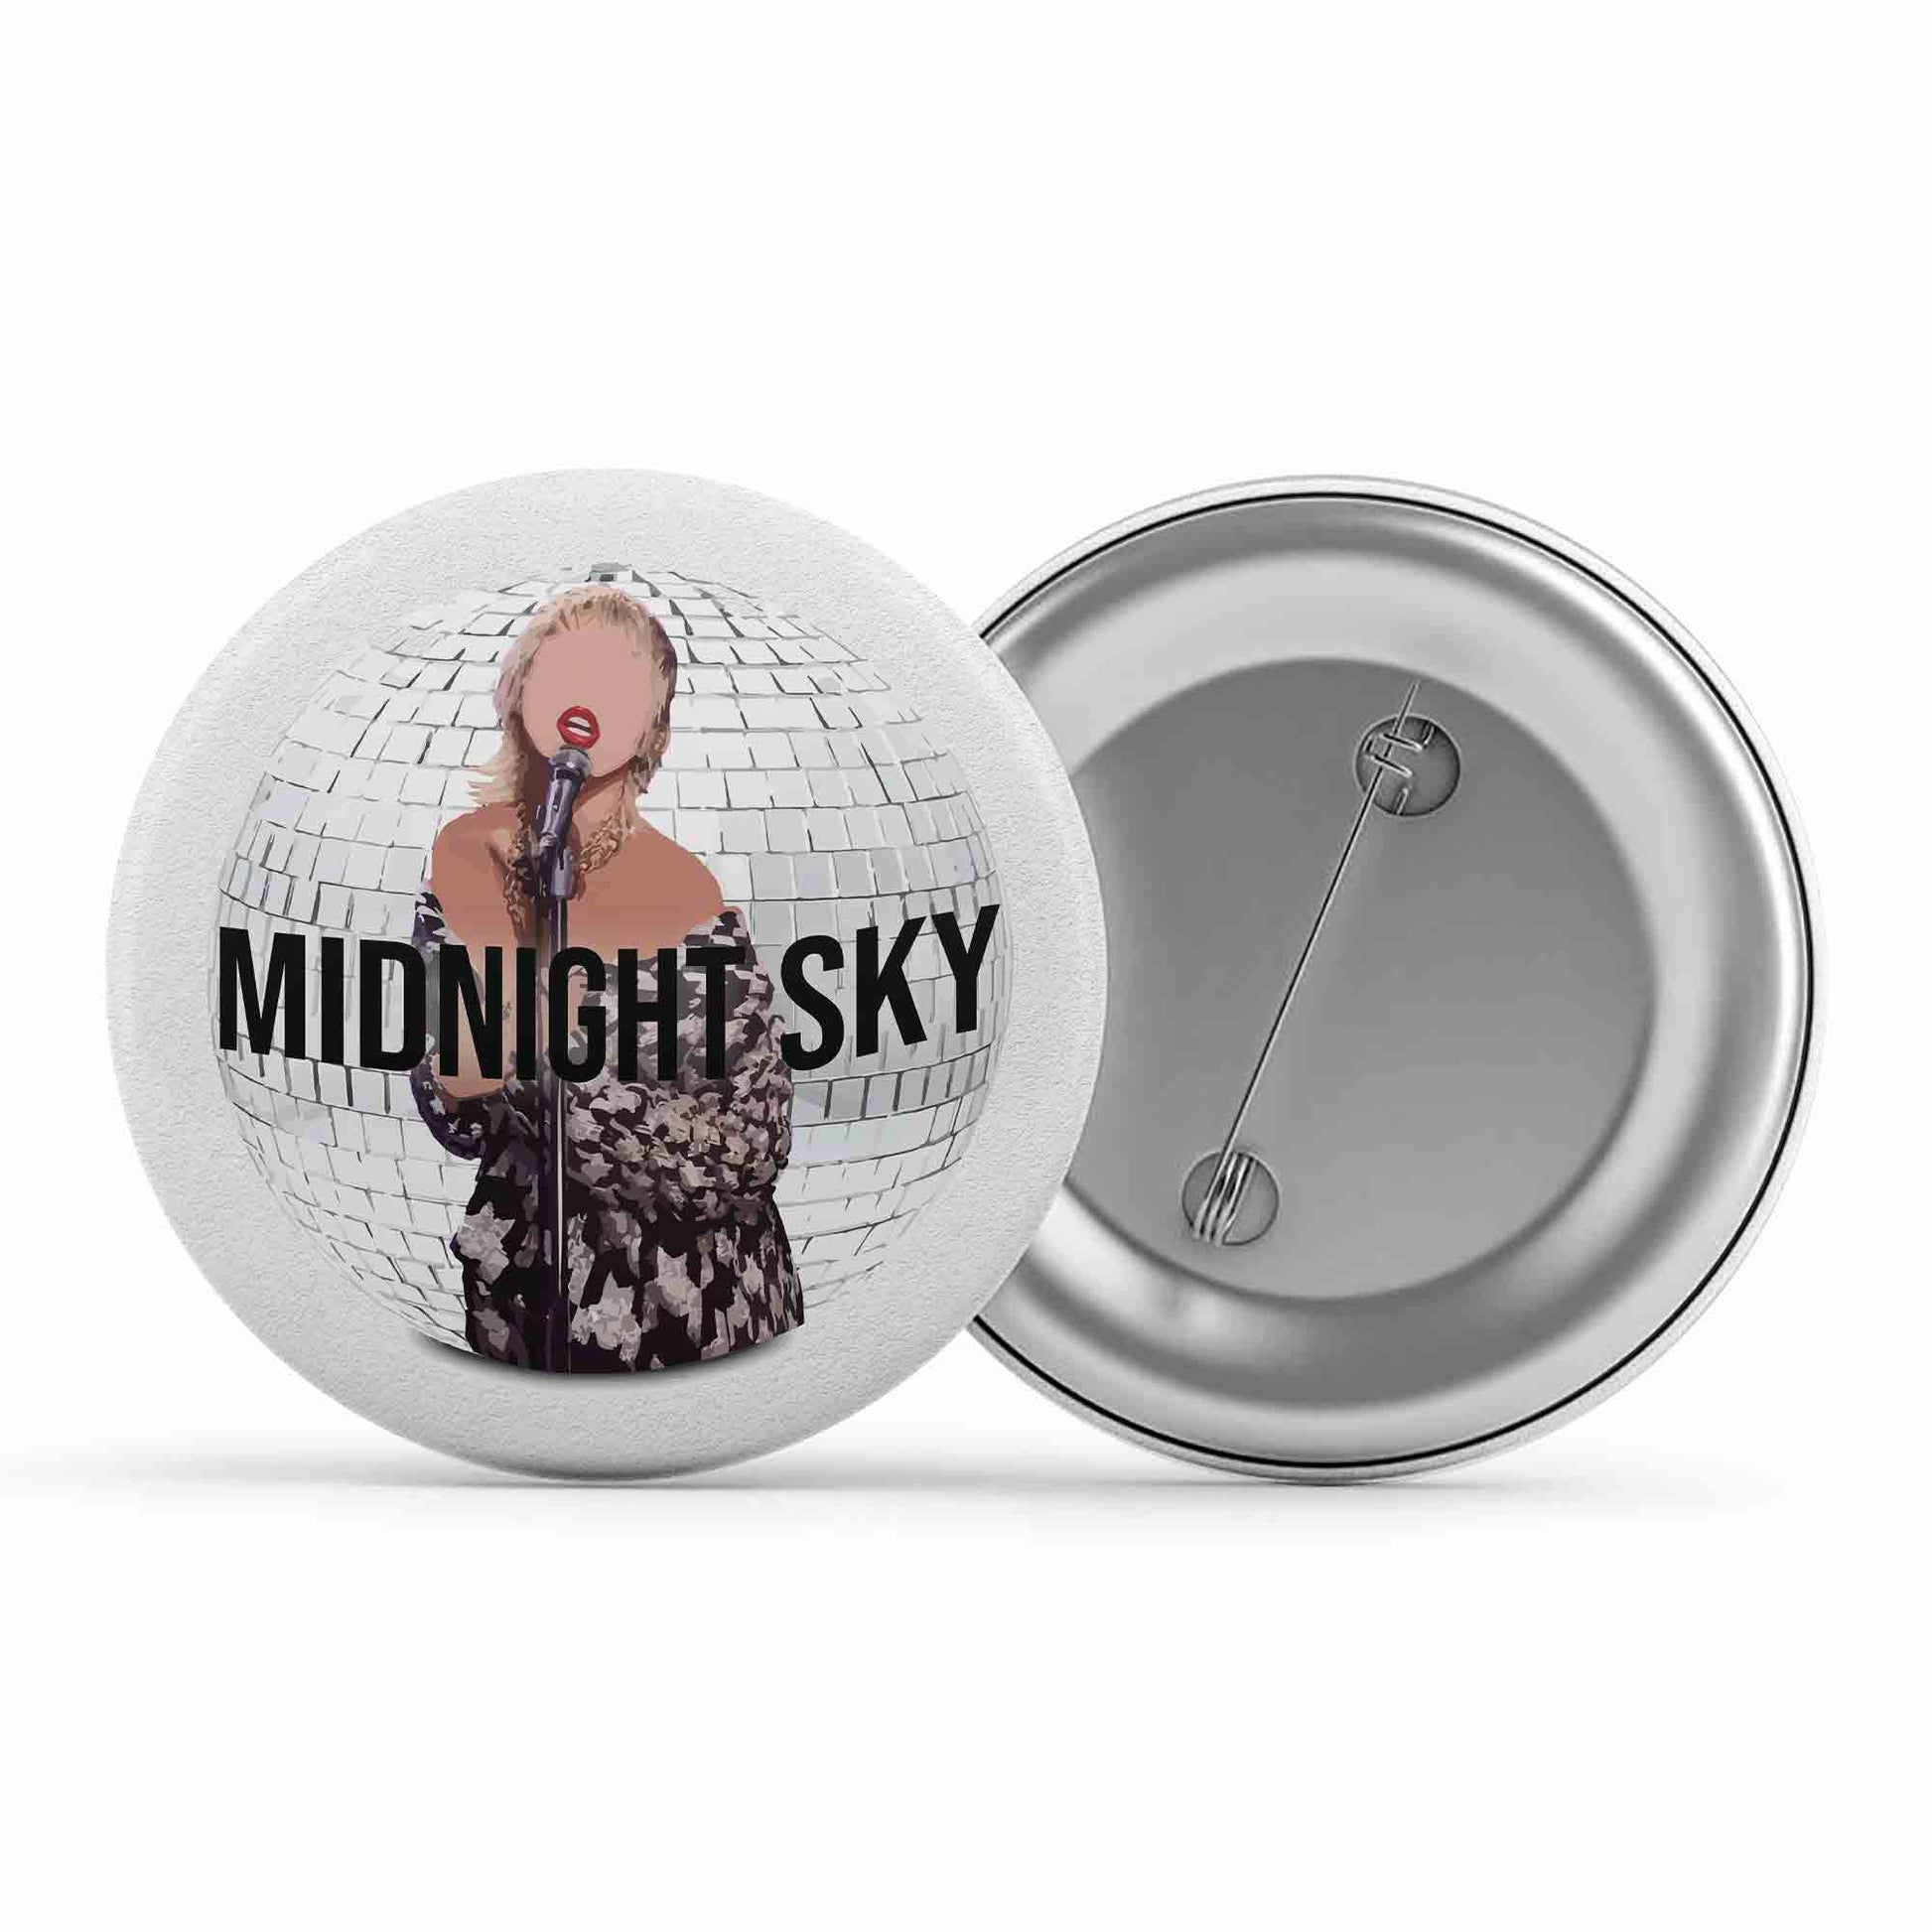 Buy Miley Cyrus Badge - Midnight Sky at 5% OFF 🤑 – The Banyan Tee